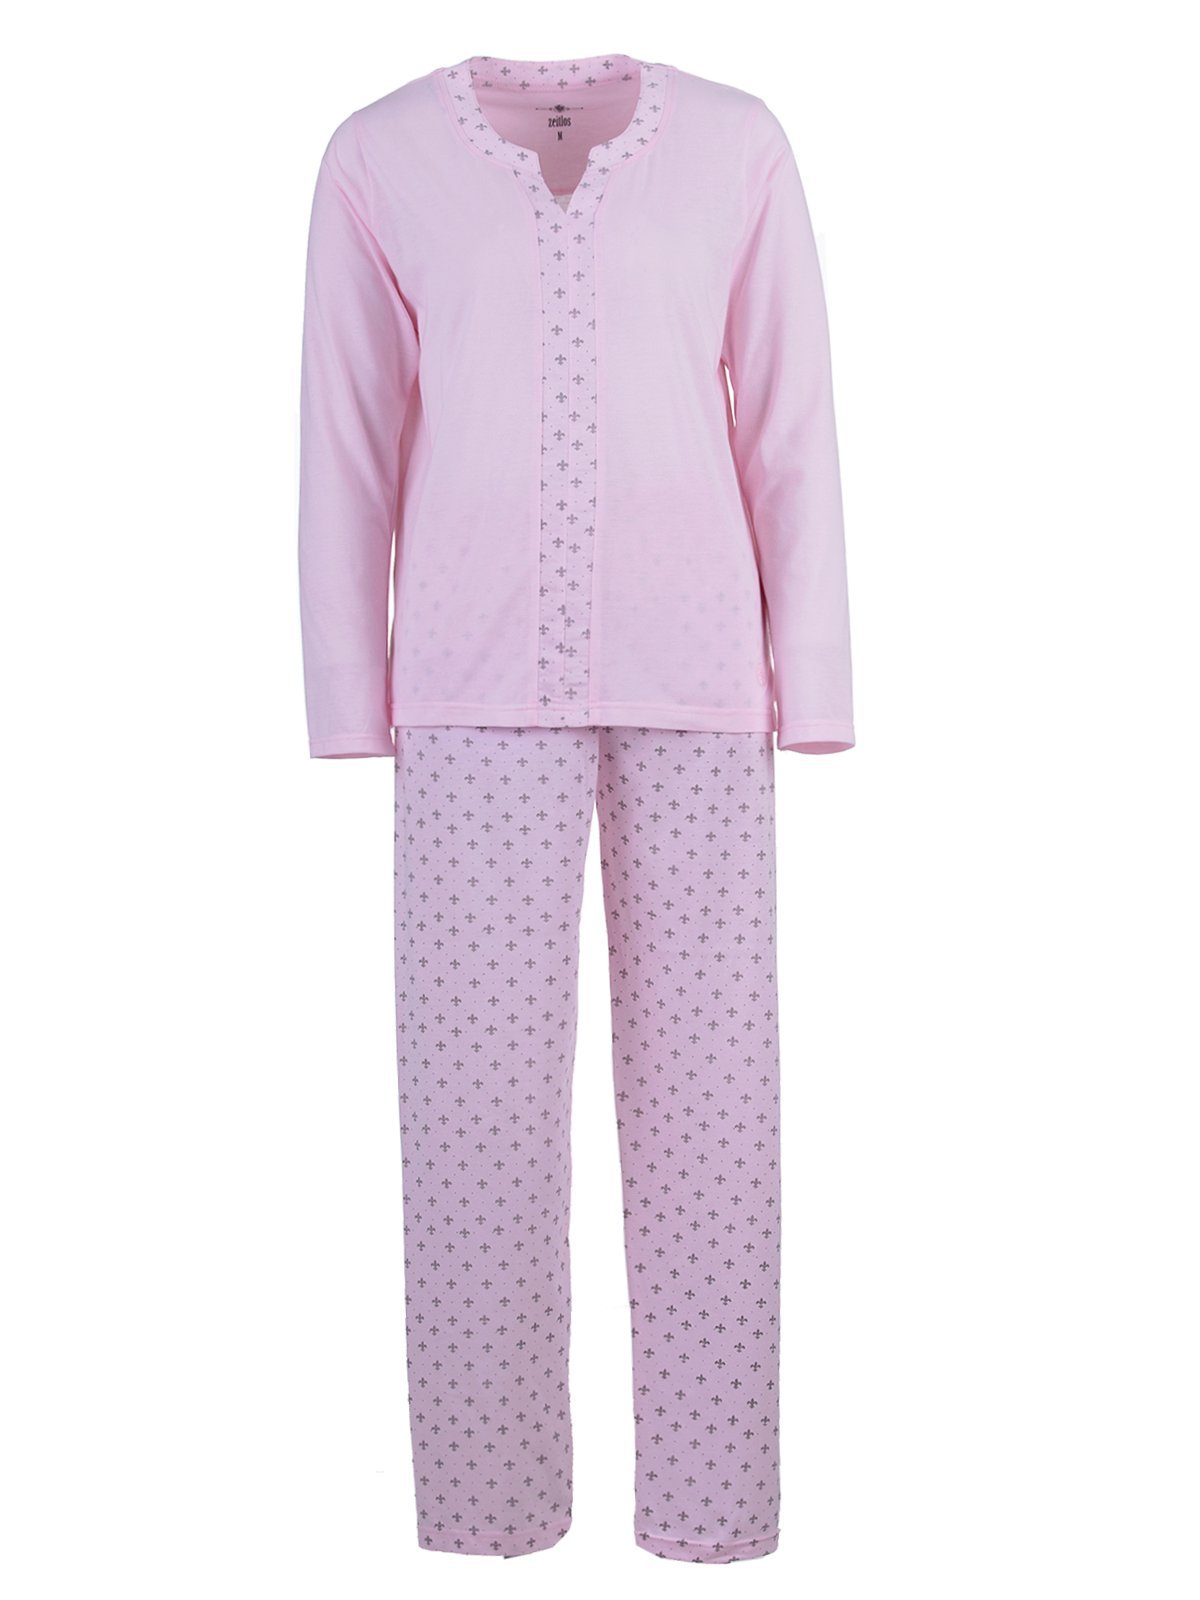 zeitlos Schlafanzug Pyjama Set Langarm - Borte Lilie rosa